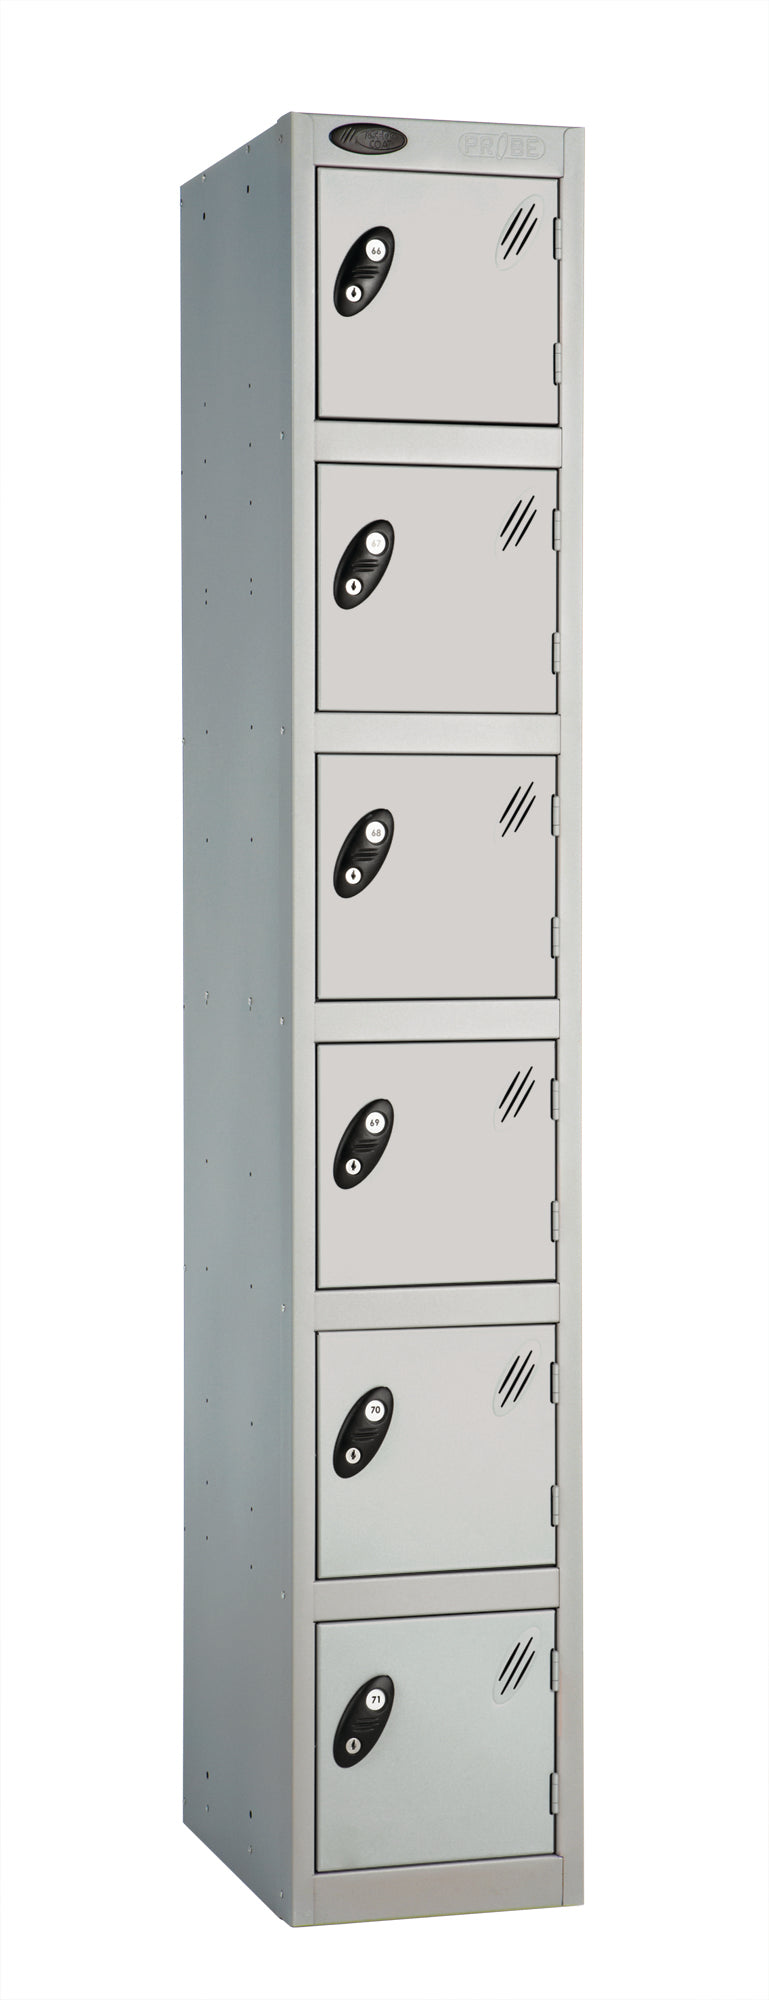 PROBEBOX STANDARD 1 NEST STEEL LOCKERS - DUST SILVER 6 DOOR Storage Lockers > Lockers > Cabinets > Storage > Probe > One Stop For Safety   